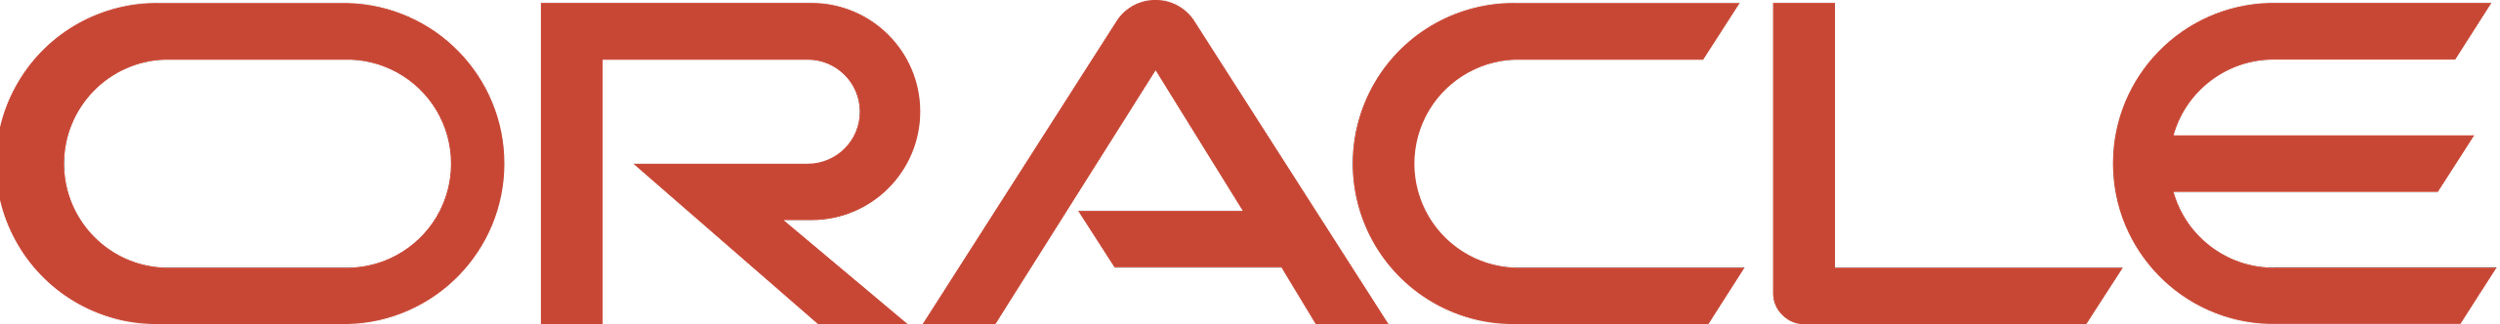 Oracle_logo.svg.png